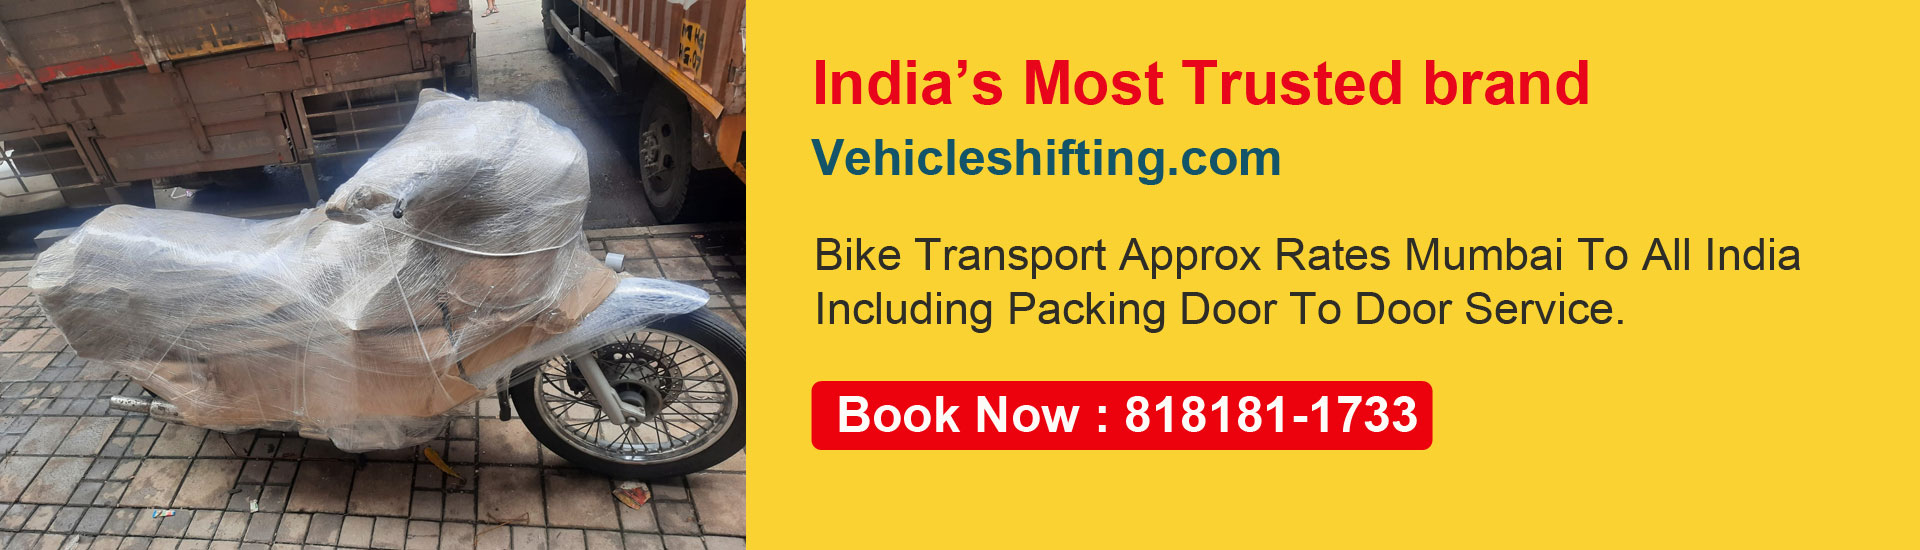 bike transportation in mumbai